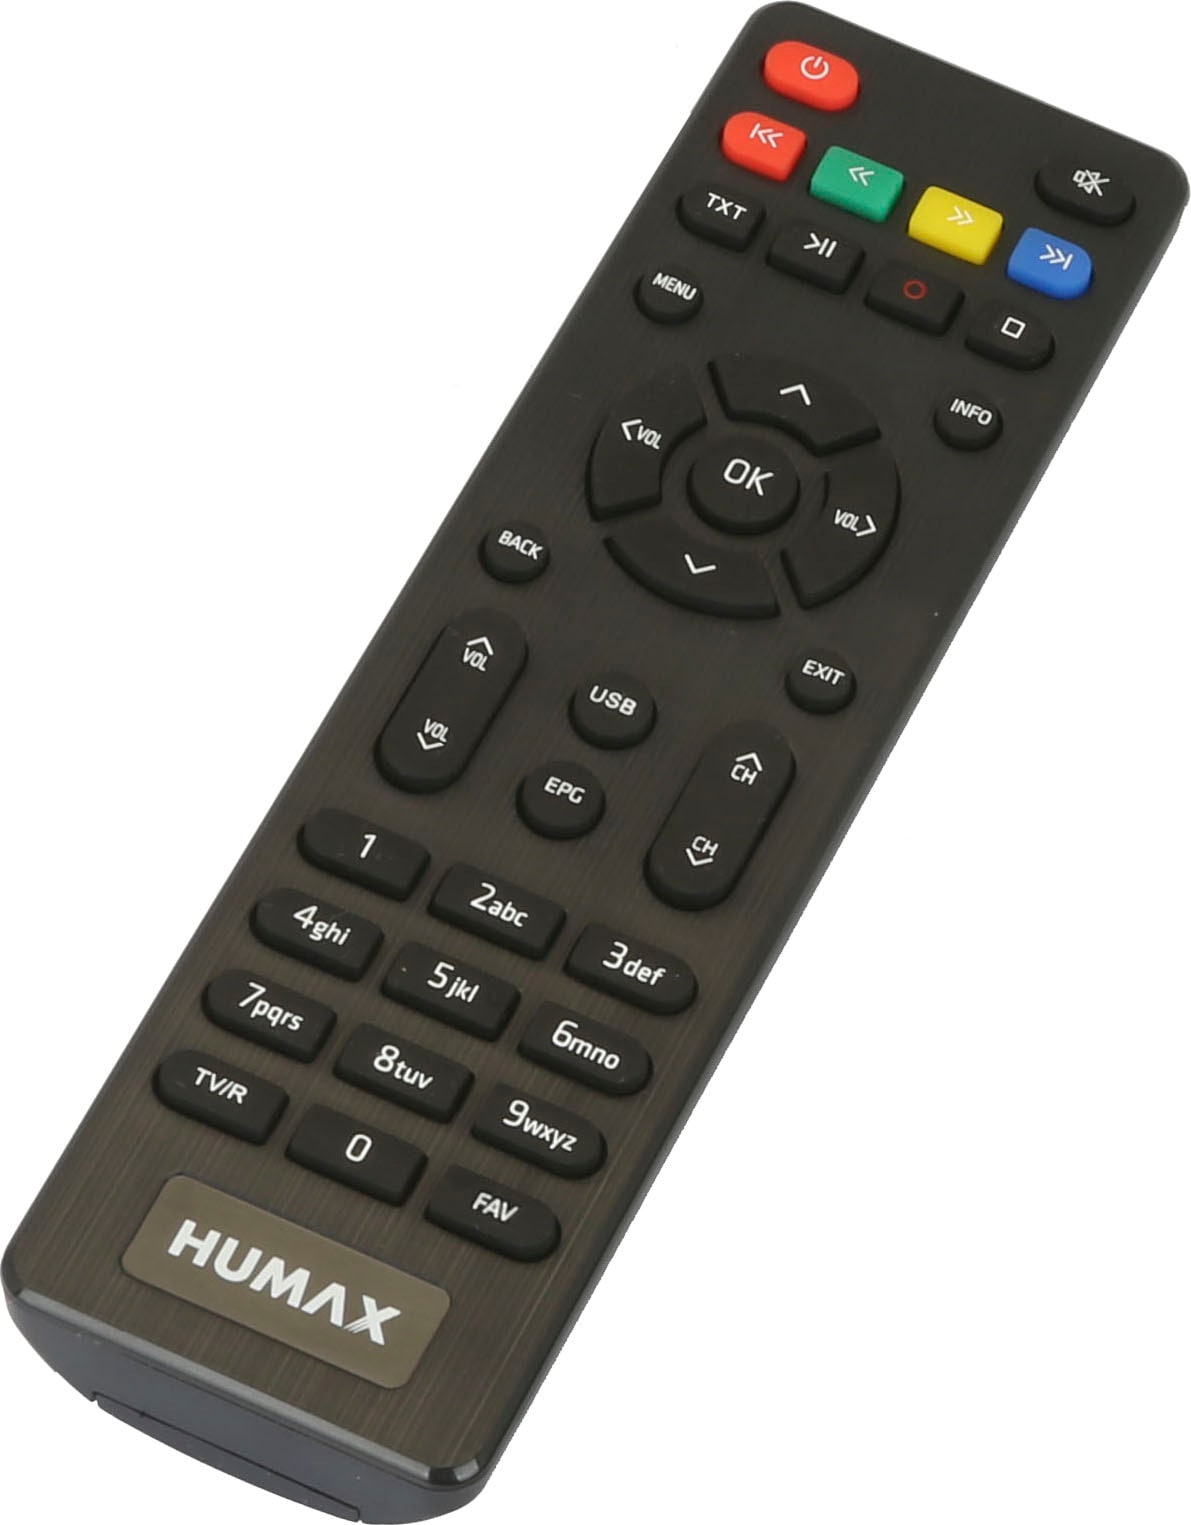 Humax Satellitenreceiver »HD Nano Digitaler«